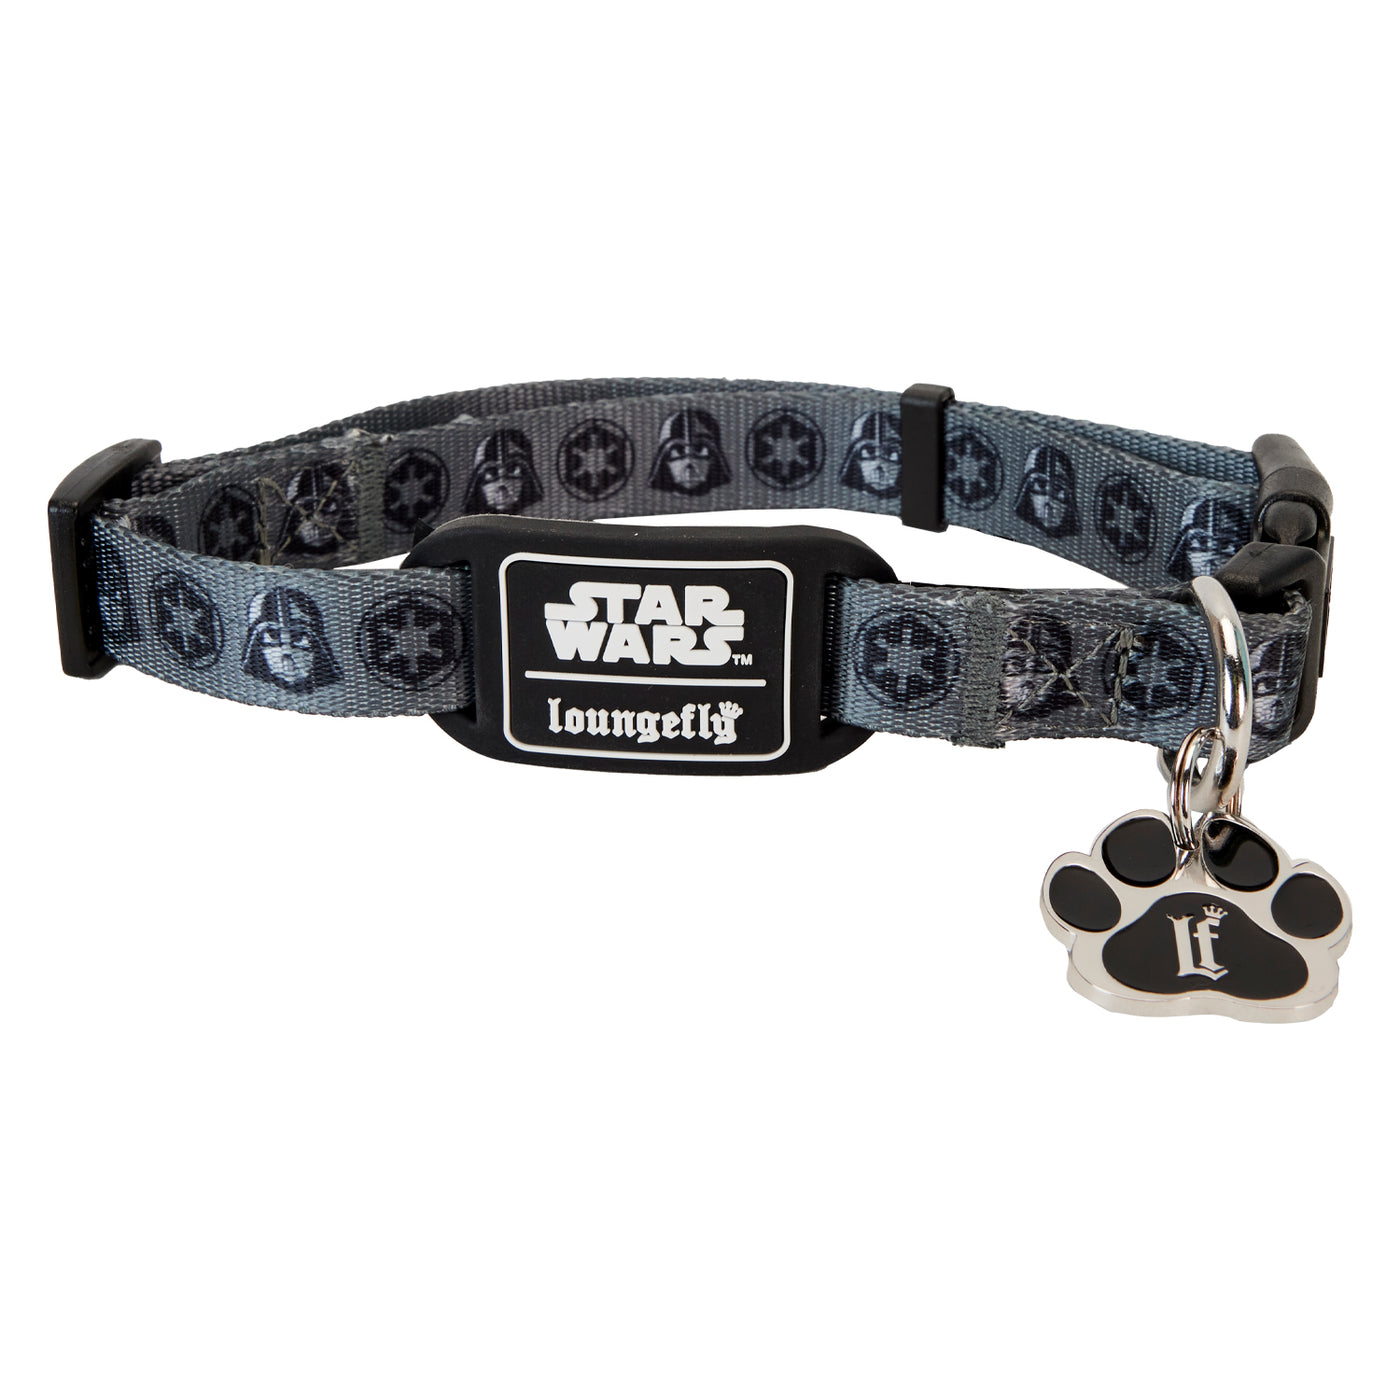 Loungefly Star Wars Darth Vader AOP Dog Collar